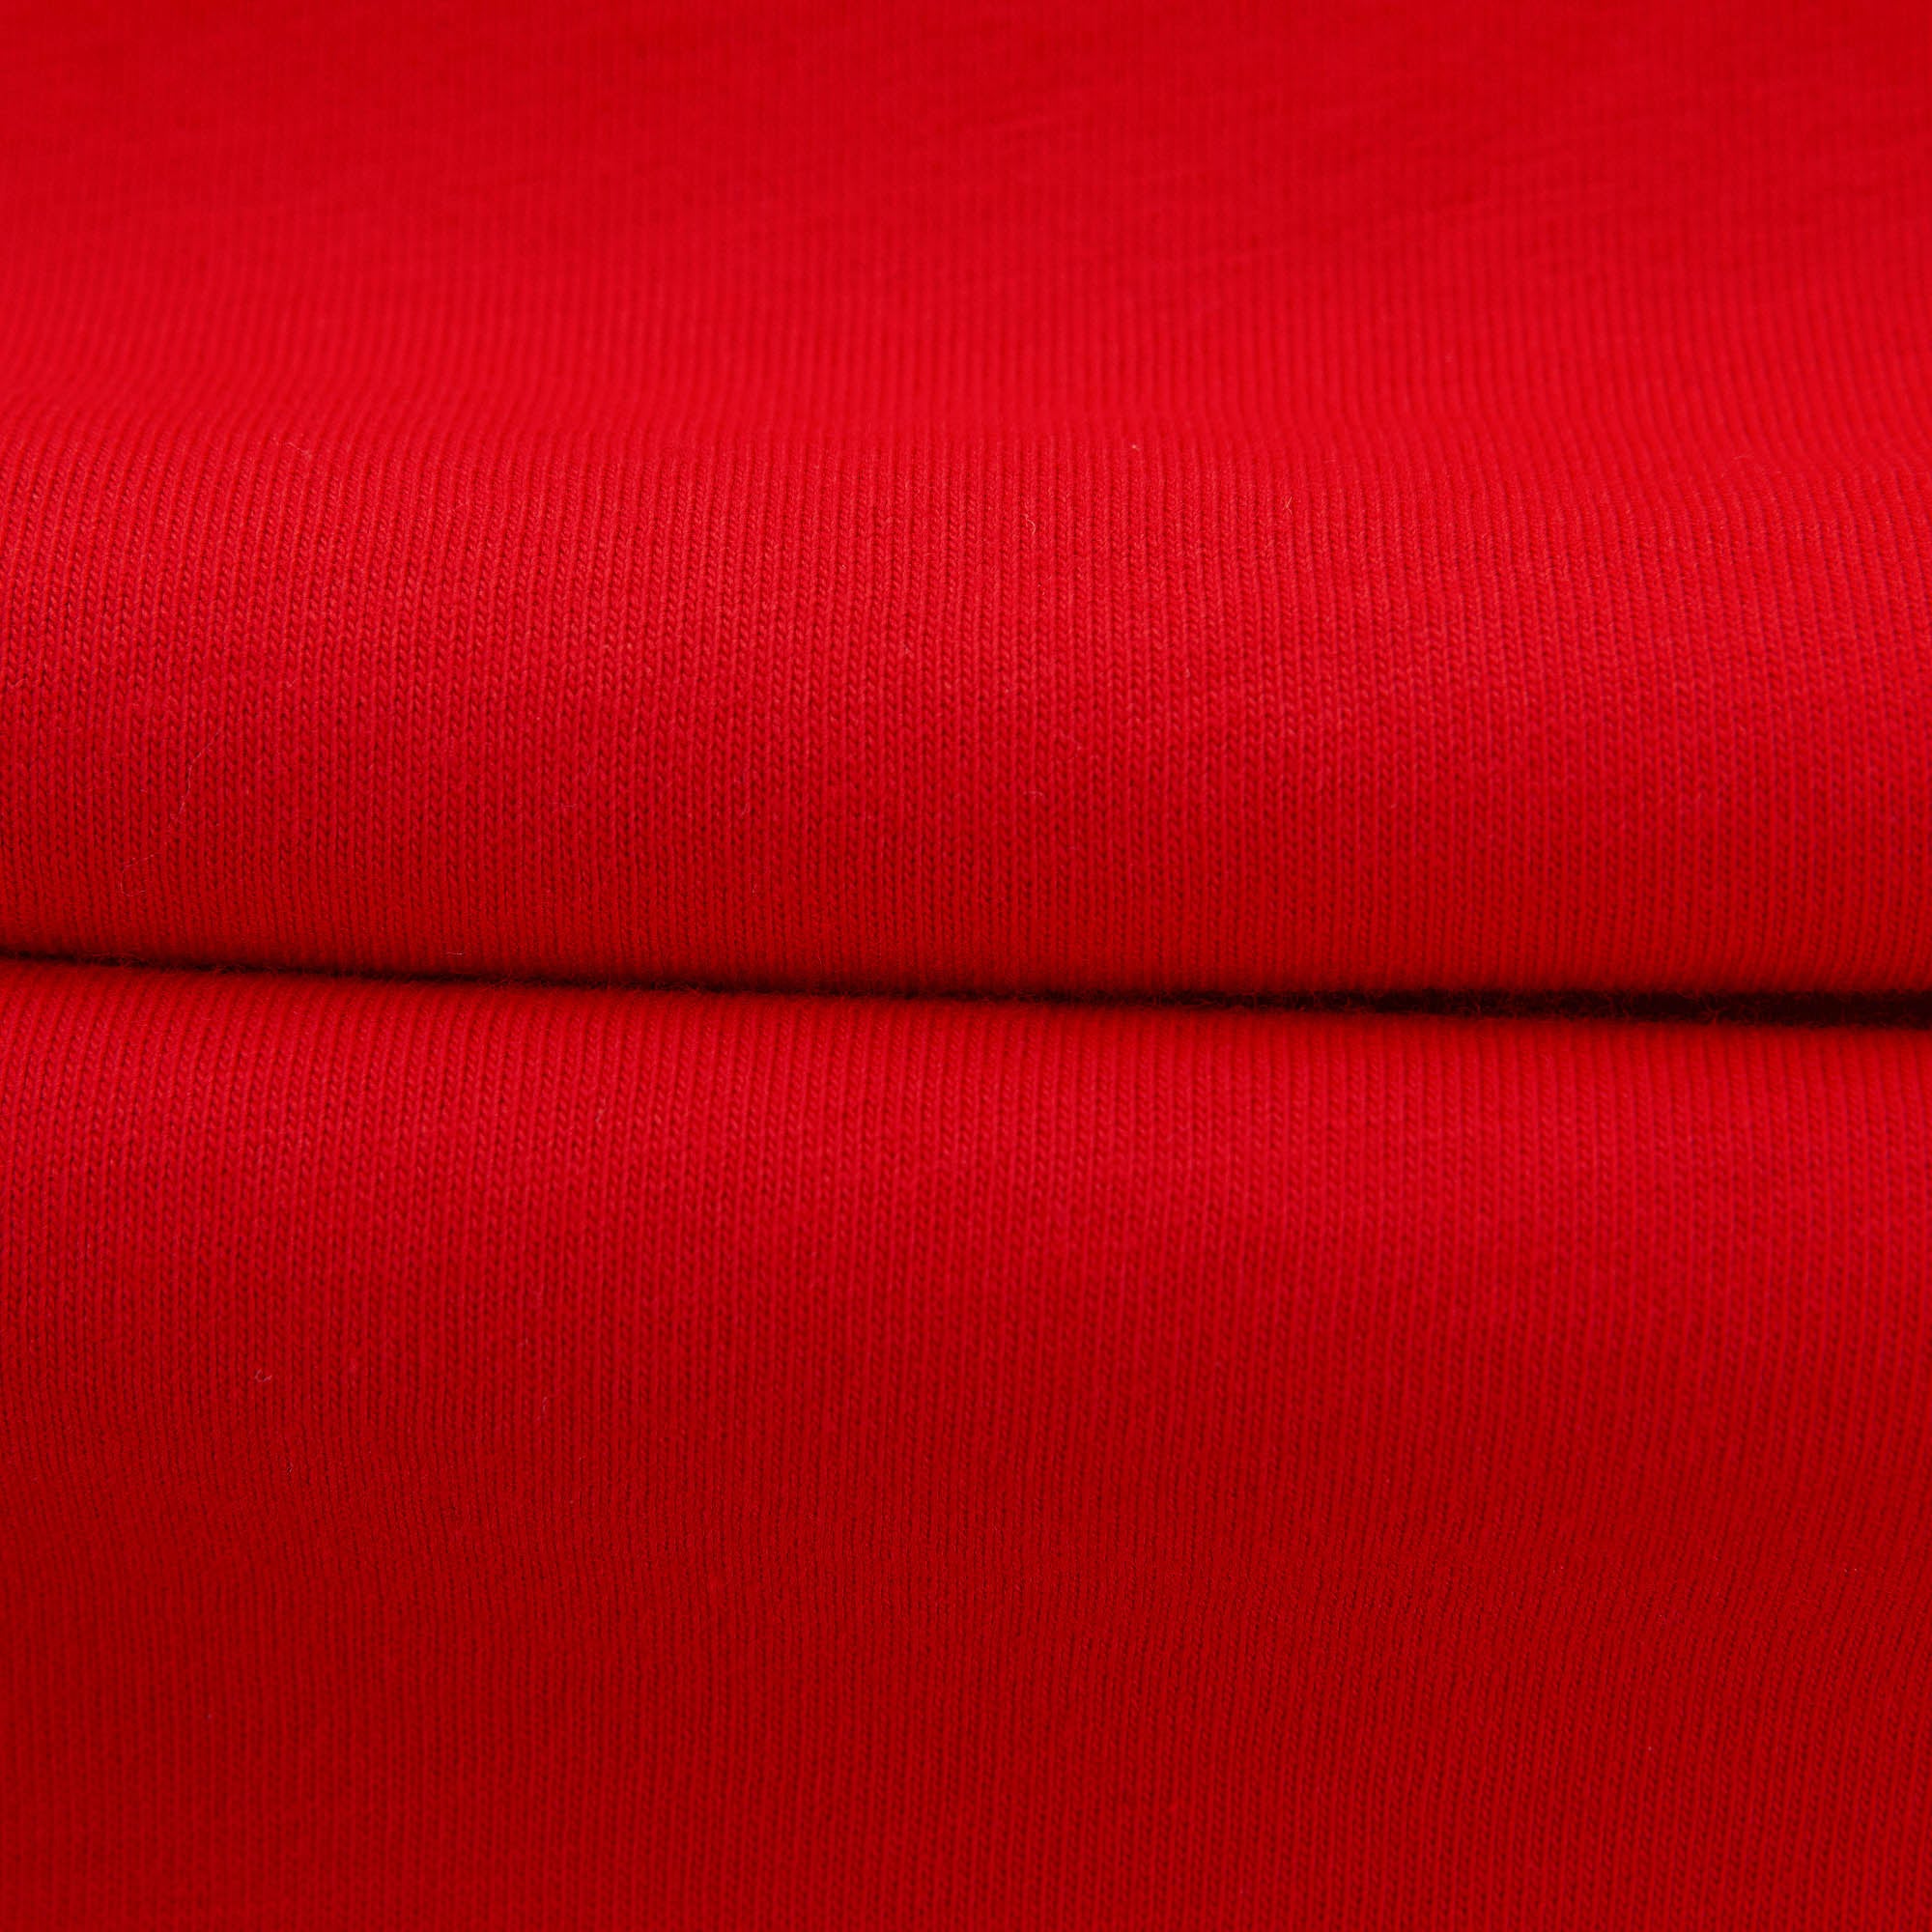 Boys & Girls Red Logo Cotton T-Shirt